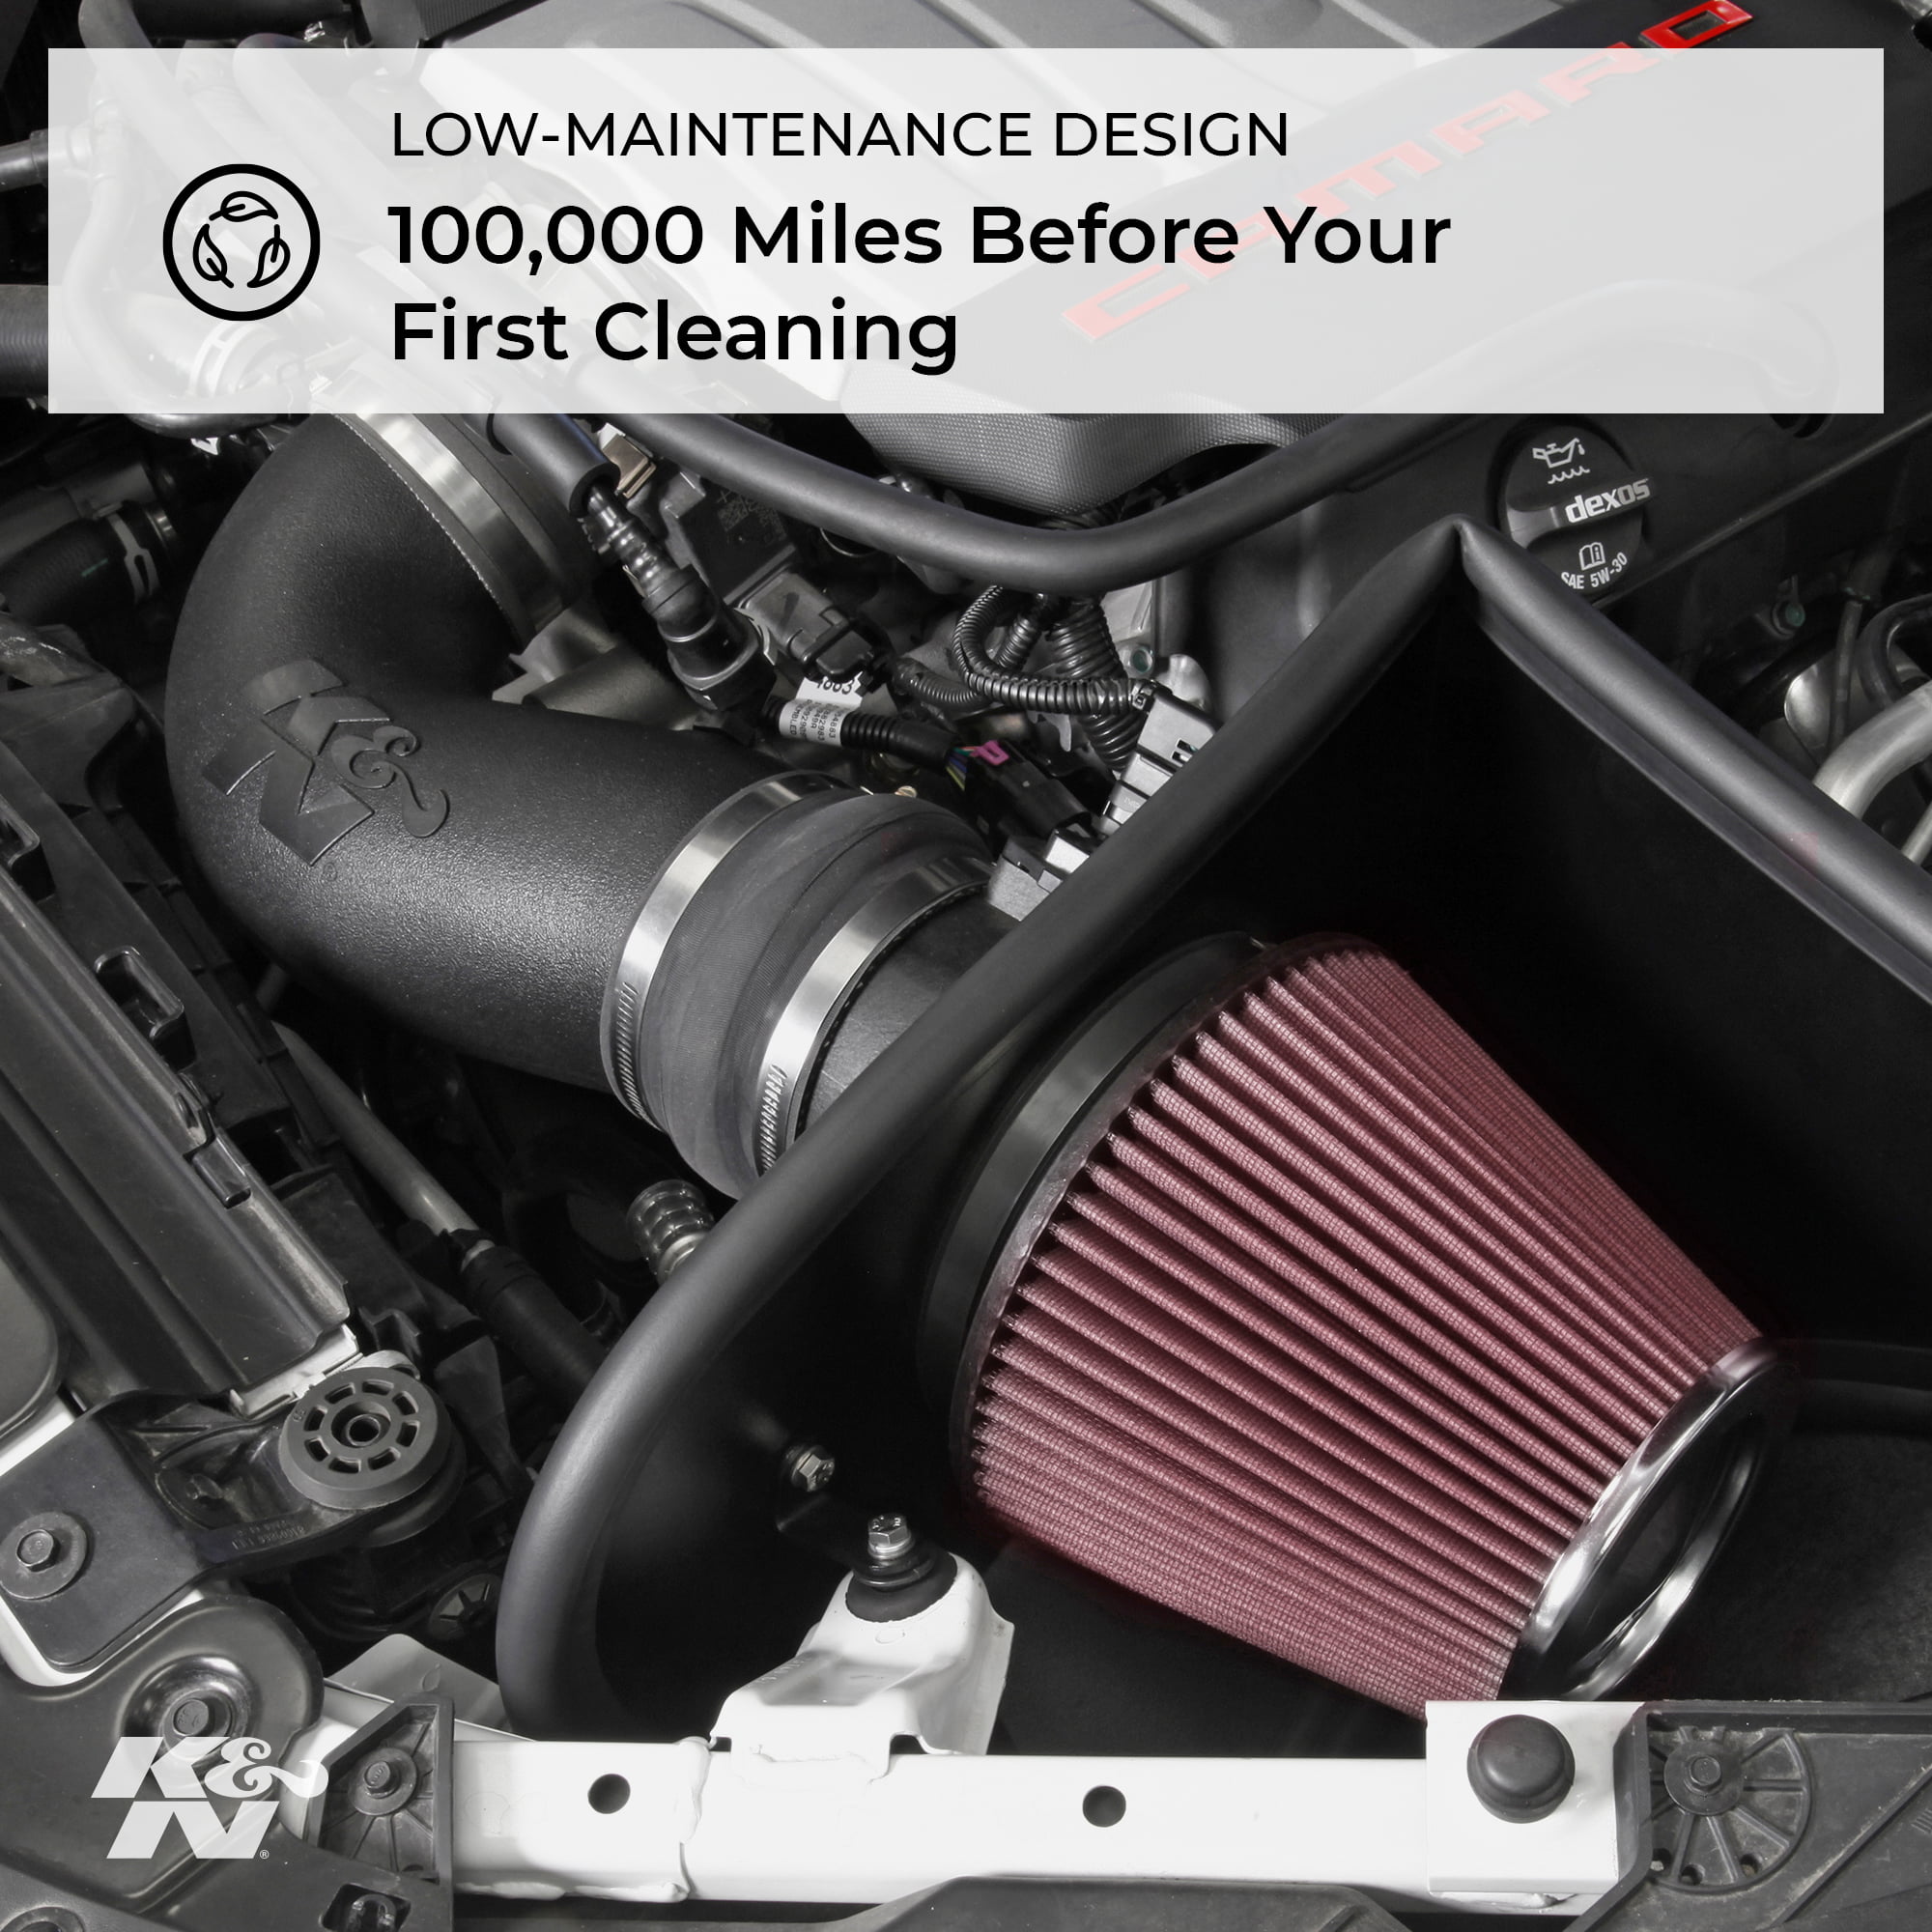 K&N Cold Air Intake Kit: High Performance 3.8L V6 77-1553KP Guaranteed to Increase Horsepower: Fits 2007-2011 Jeep Wrangler 